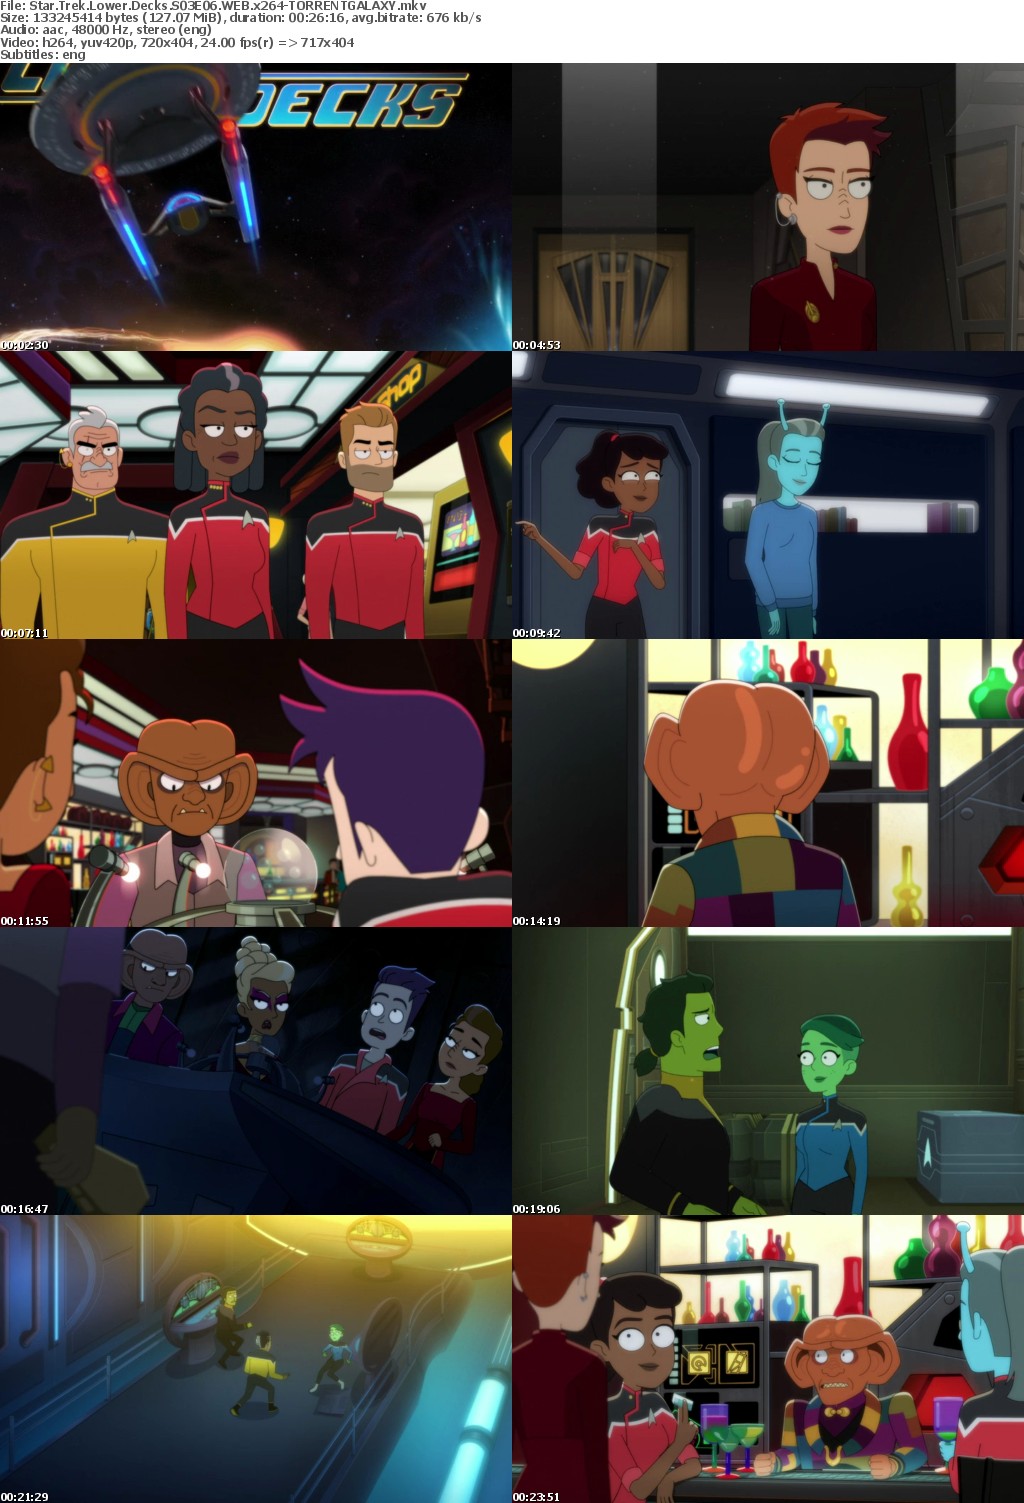 Star Trek Lower Decks S03E06 WEB x264-GALAXY